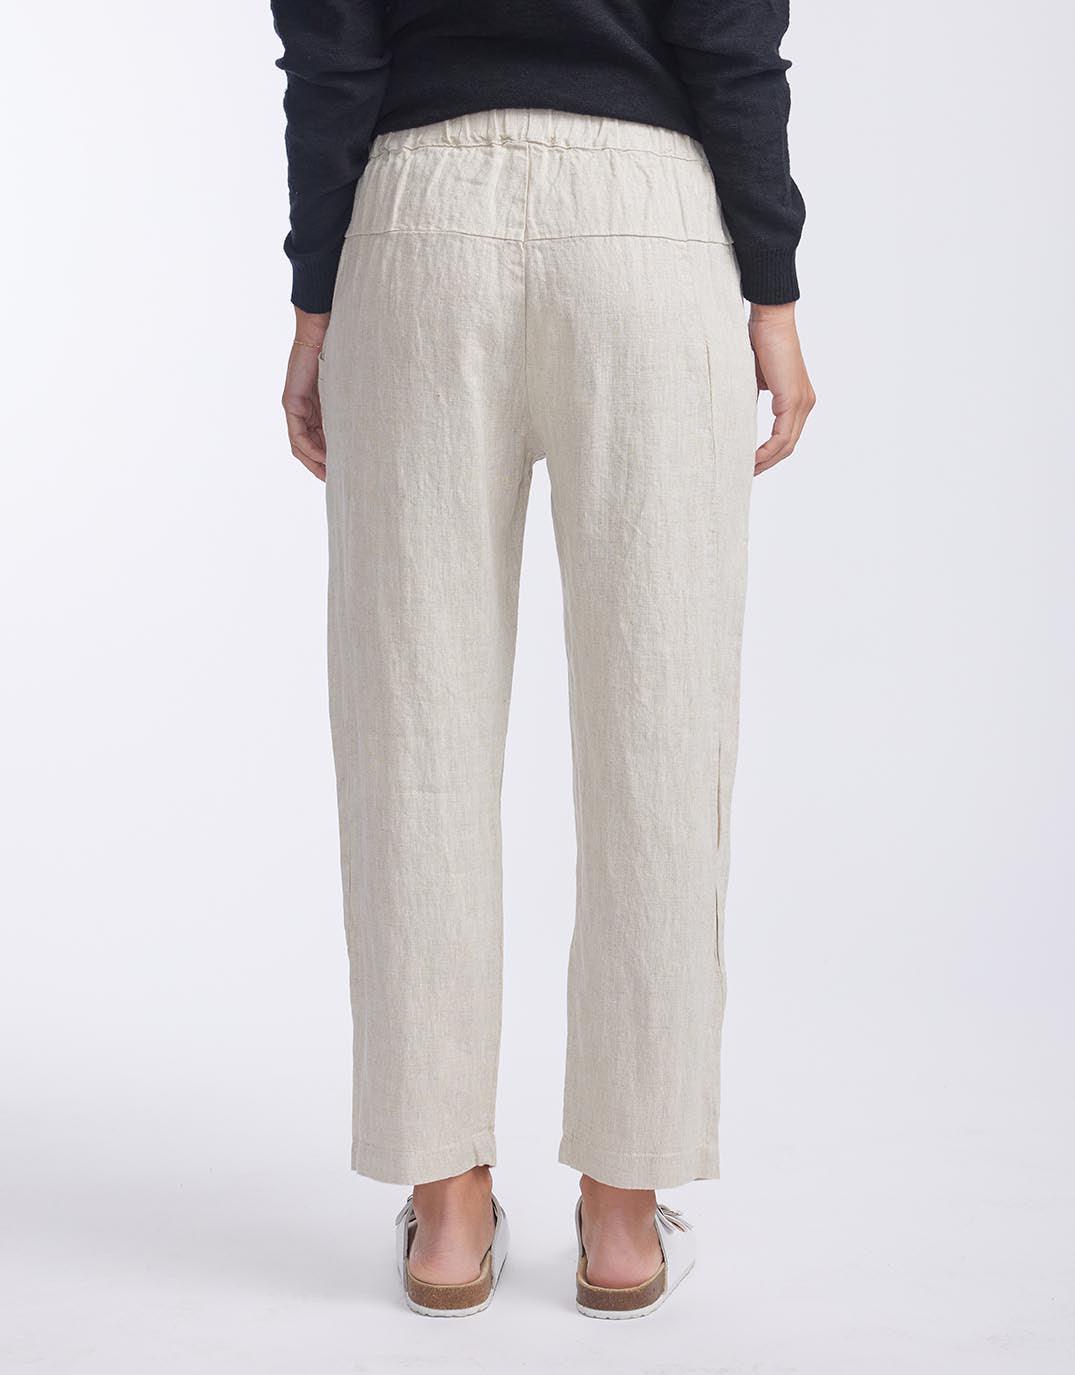 Buy Luxe Linen Pants - Natural Little Lies for Sale Online Australia ...